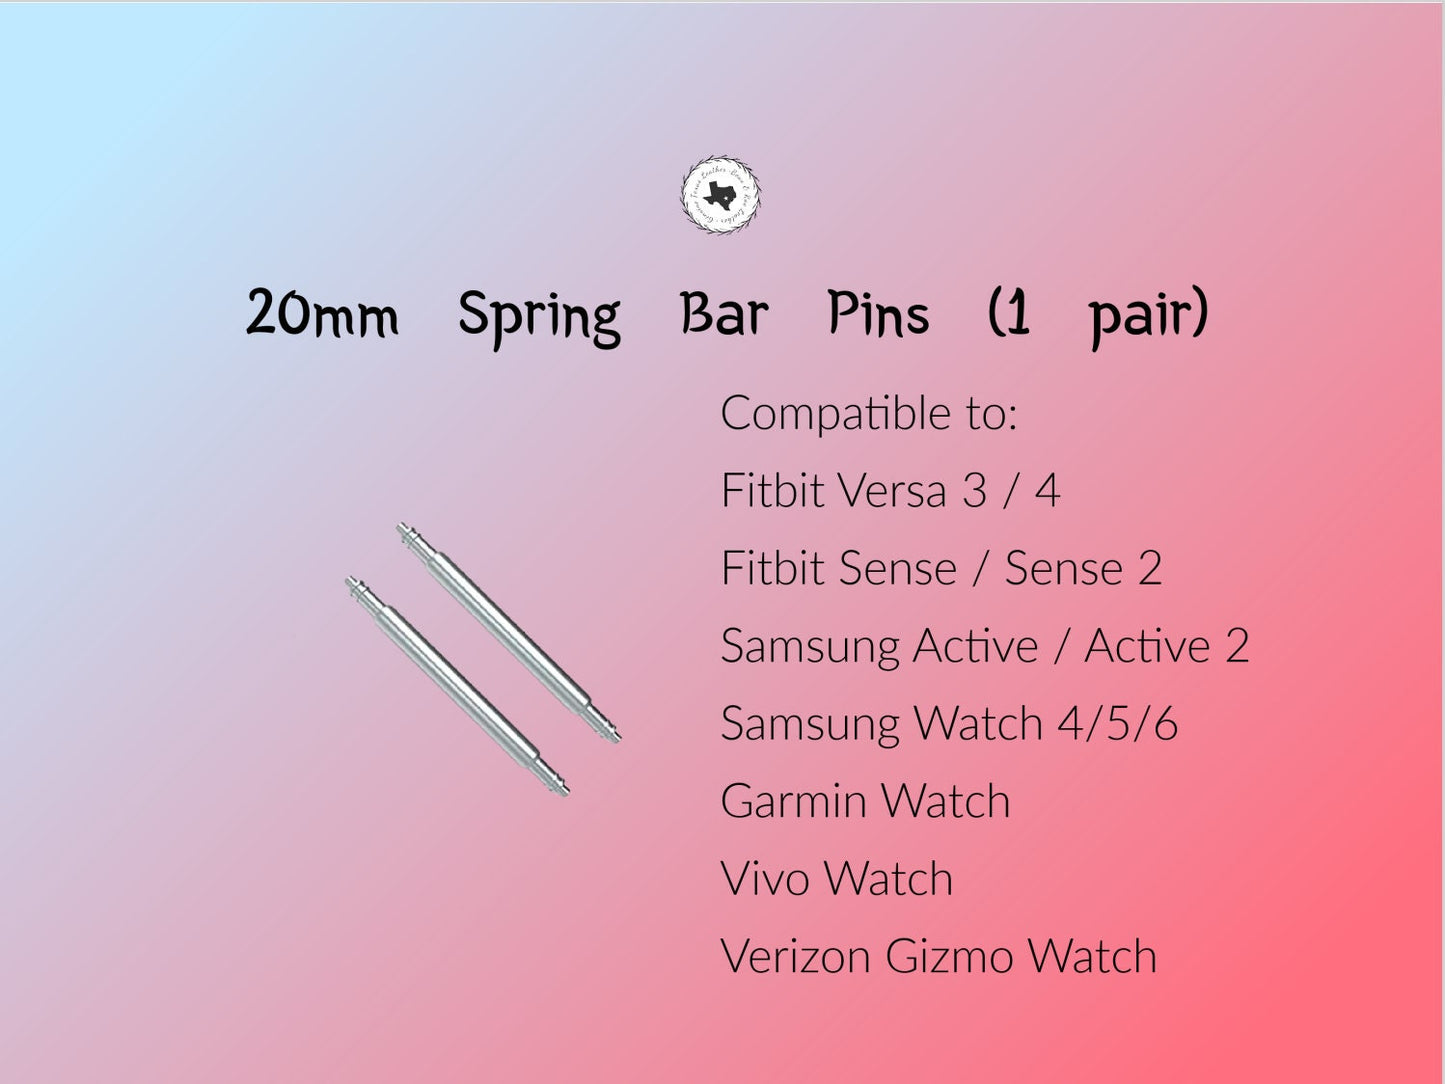 20mm Quick Release Spring Bar Pins for Samsung Watch, Fitbit, Garmin, Vivo, Verizon Gizmo